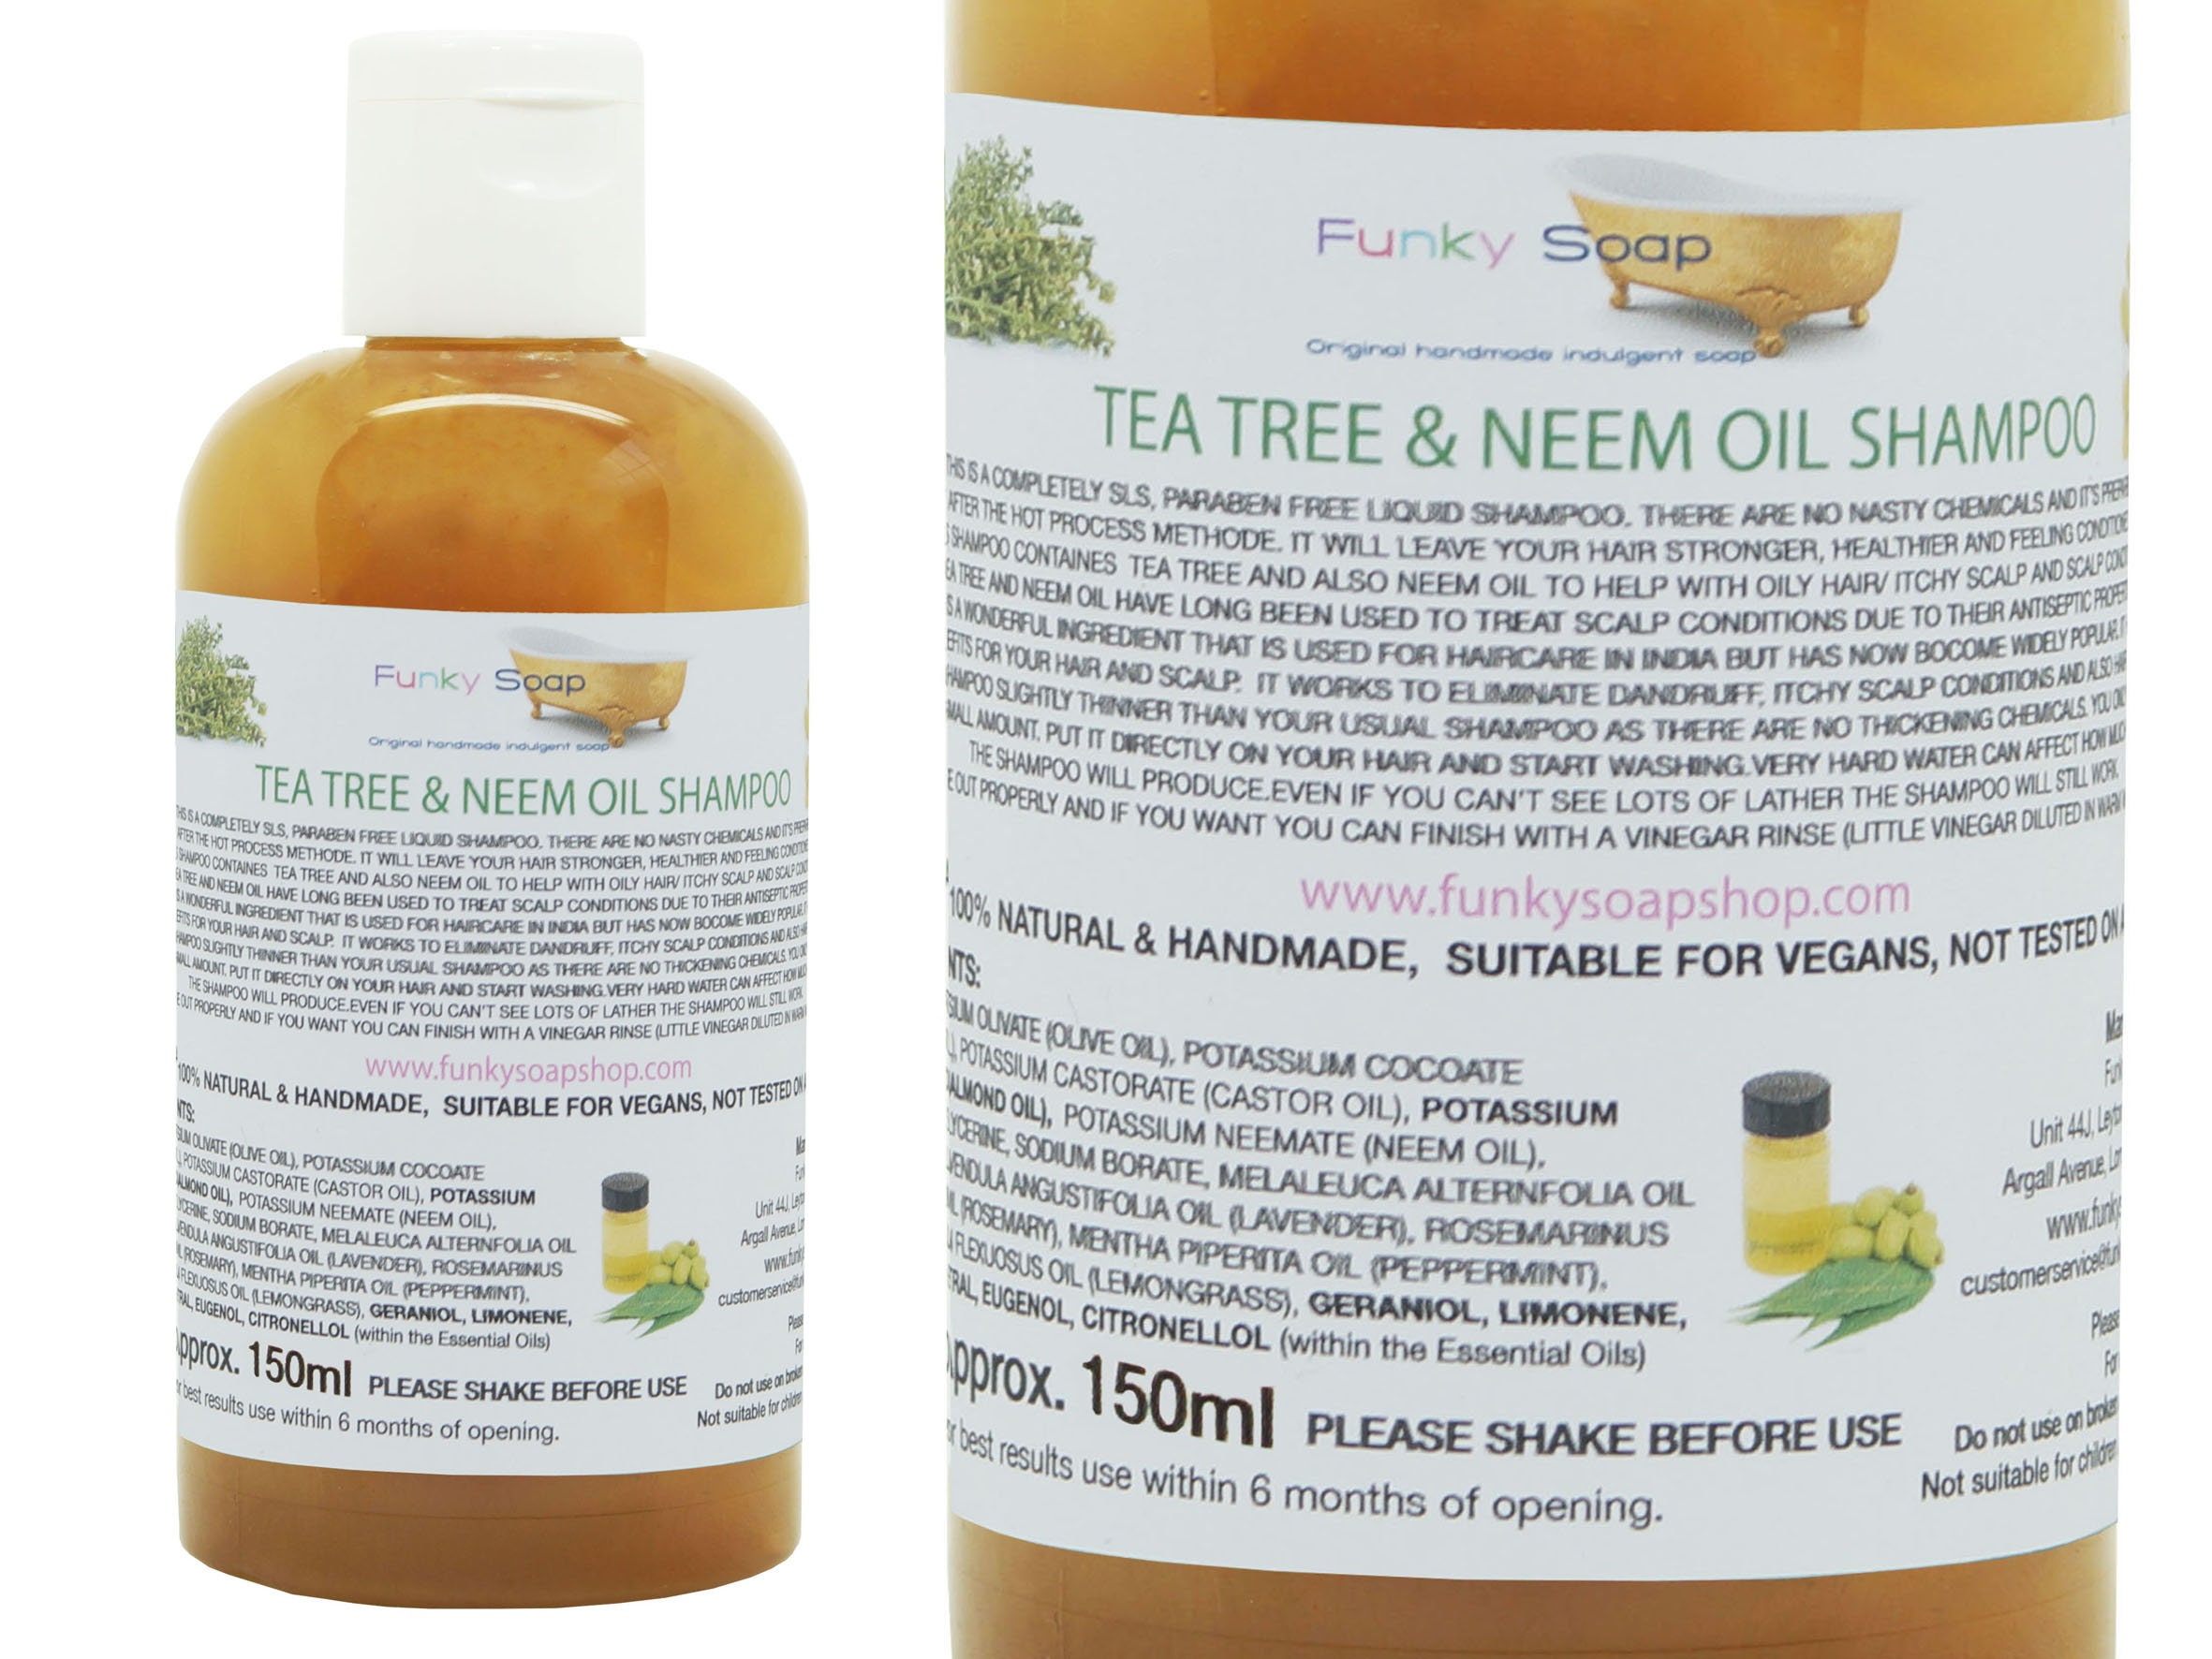 Fotoelektrisch ondeugd Subtropisch 1bottle Liquid Tea Tree & Neem Oil Shampoo 100% Natural SLS | Etsy